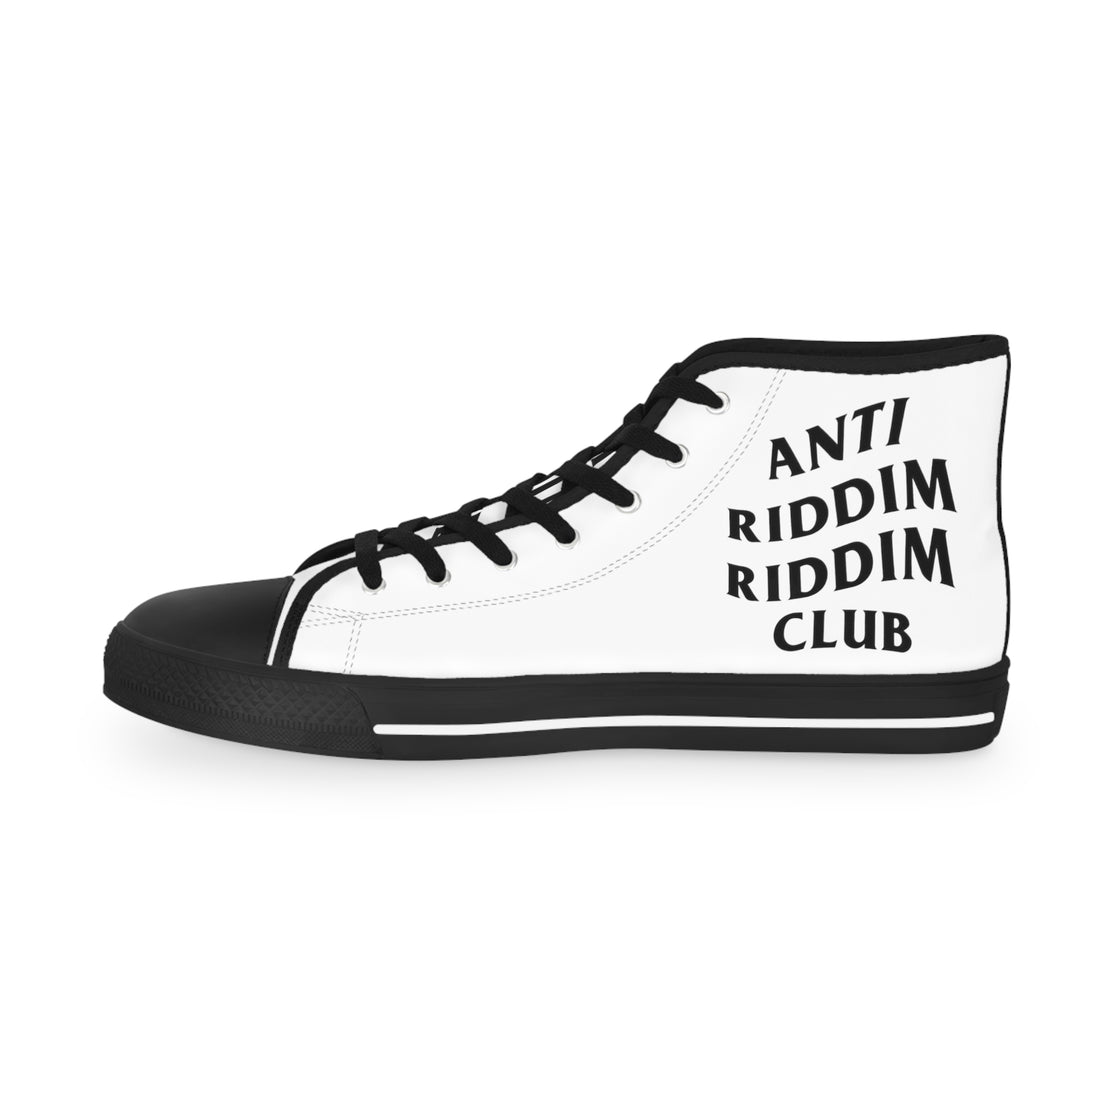 Anti Riddim Riddim Club Converse Style Shoes